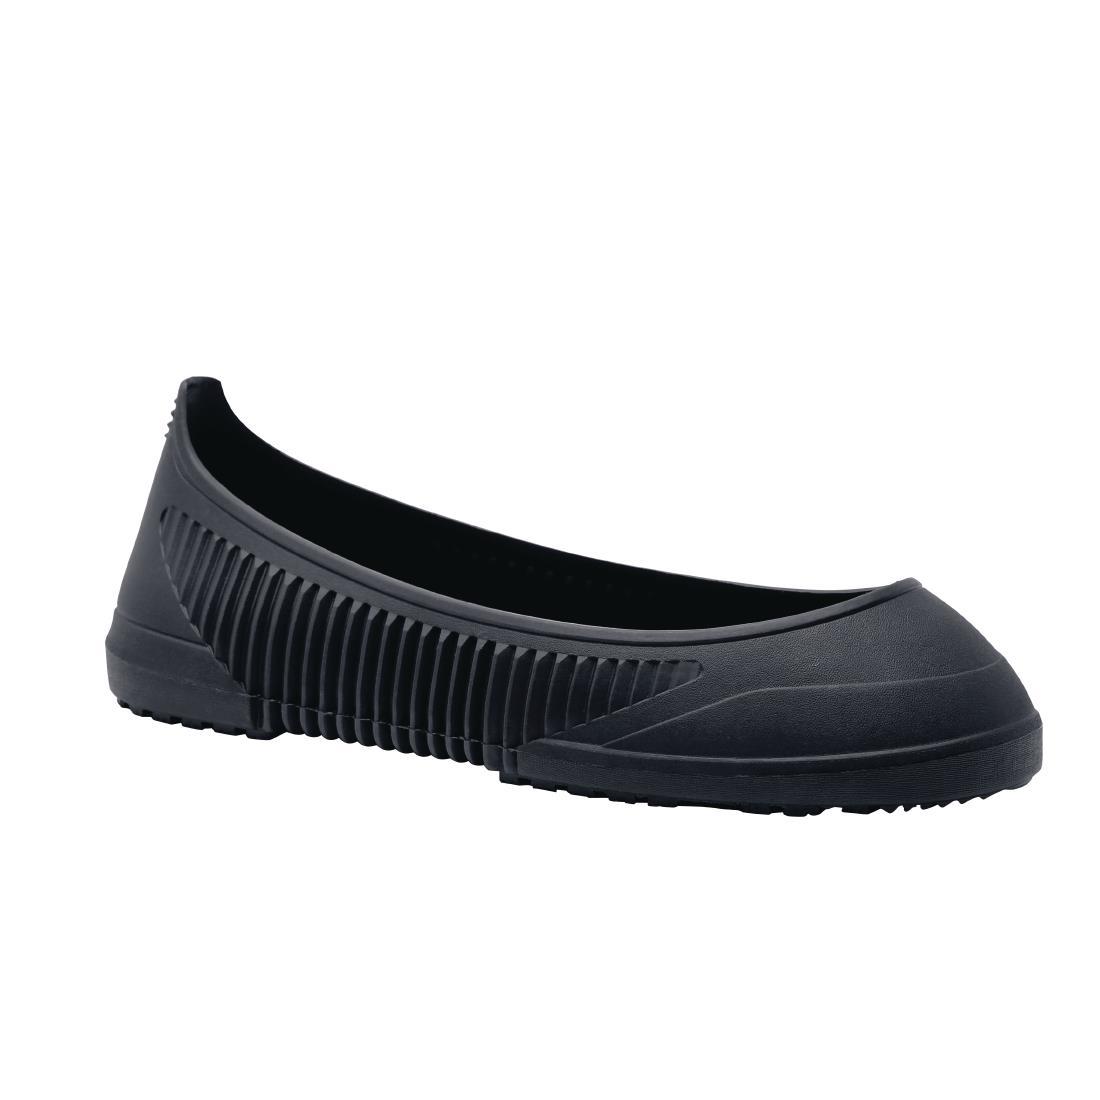 Shoes for Crews Crewguard Overshoes Black Size M - BB598-M  - 1